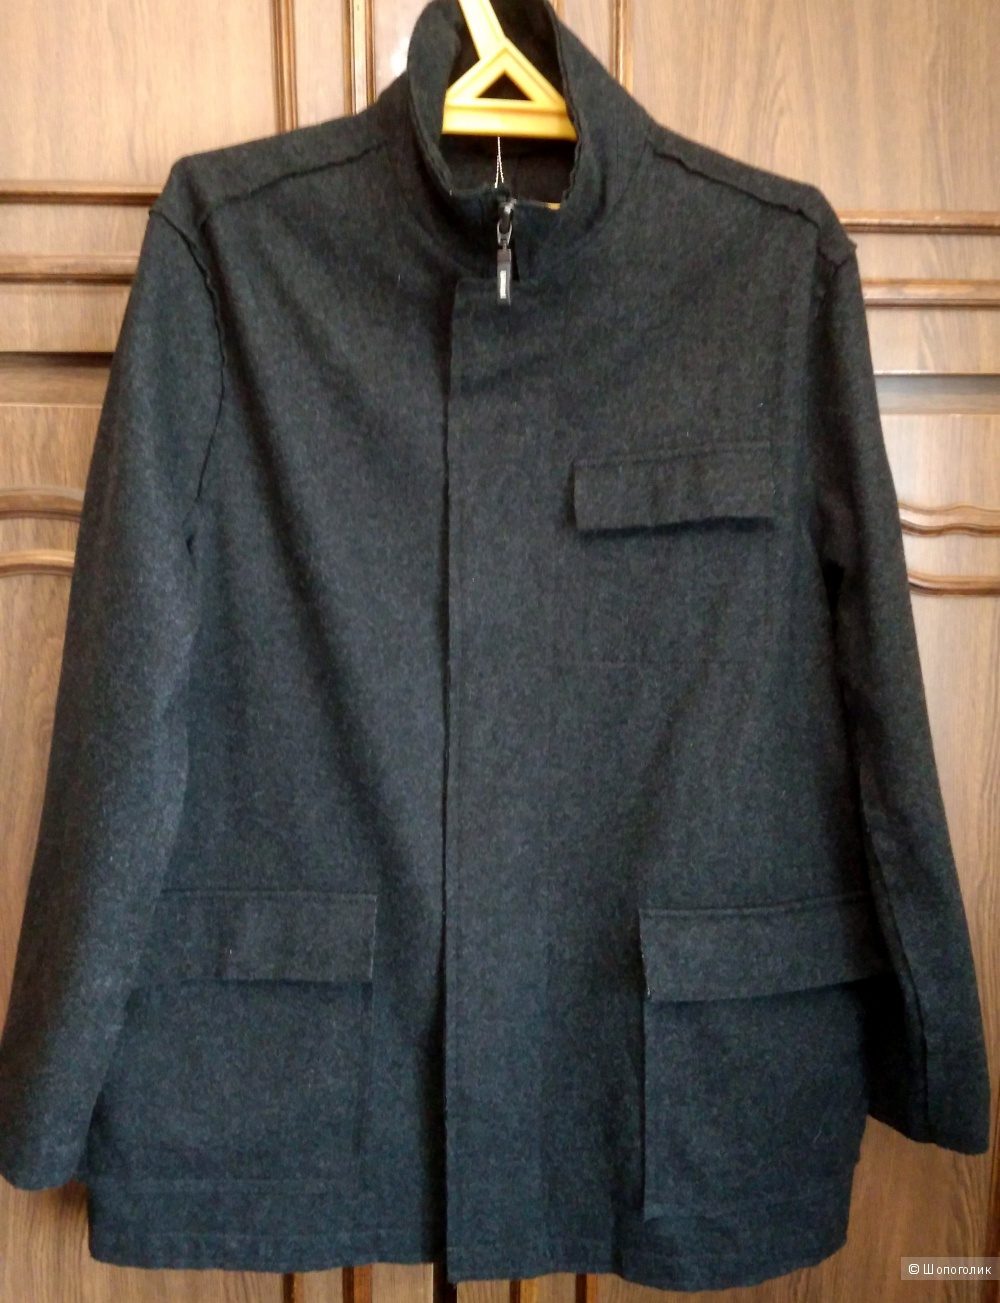 Мужская дизайнерская куртка-полупальто PETER WERTH р52